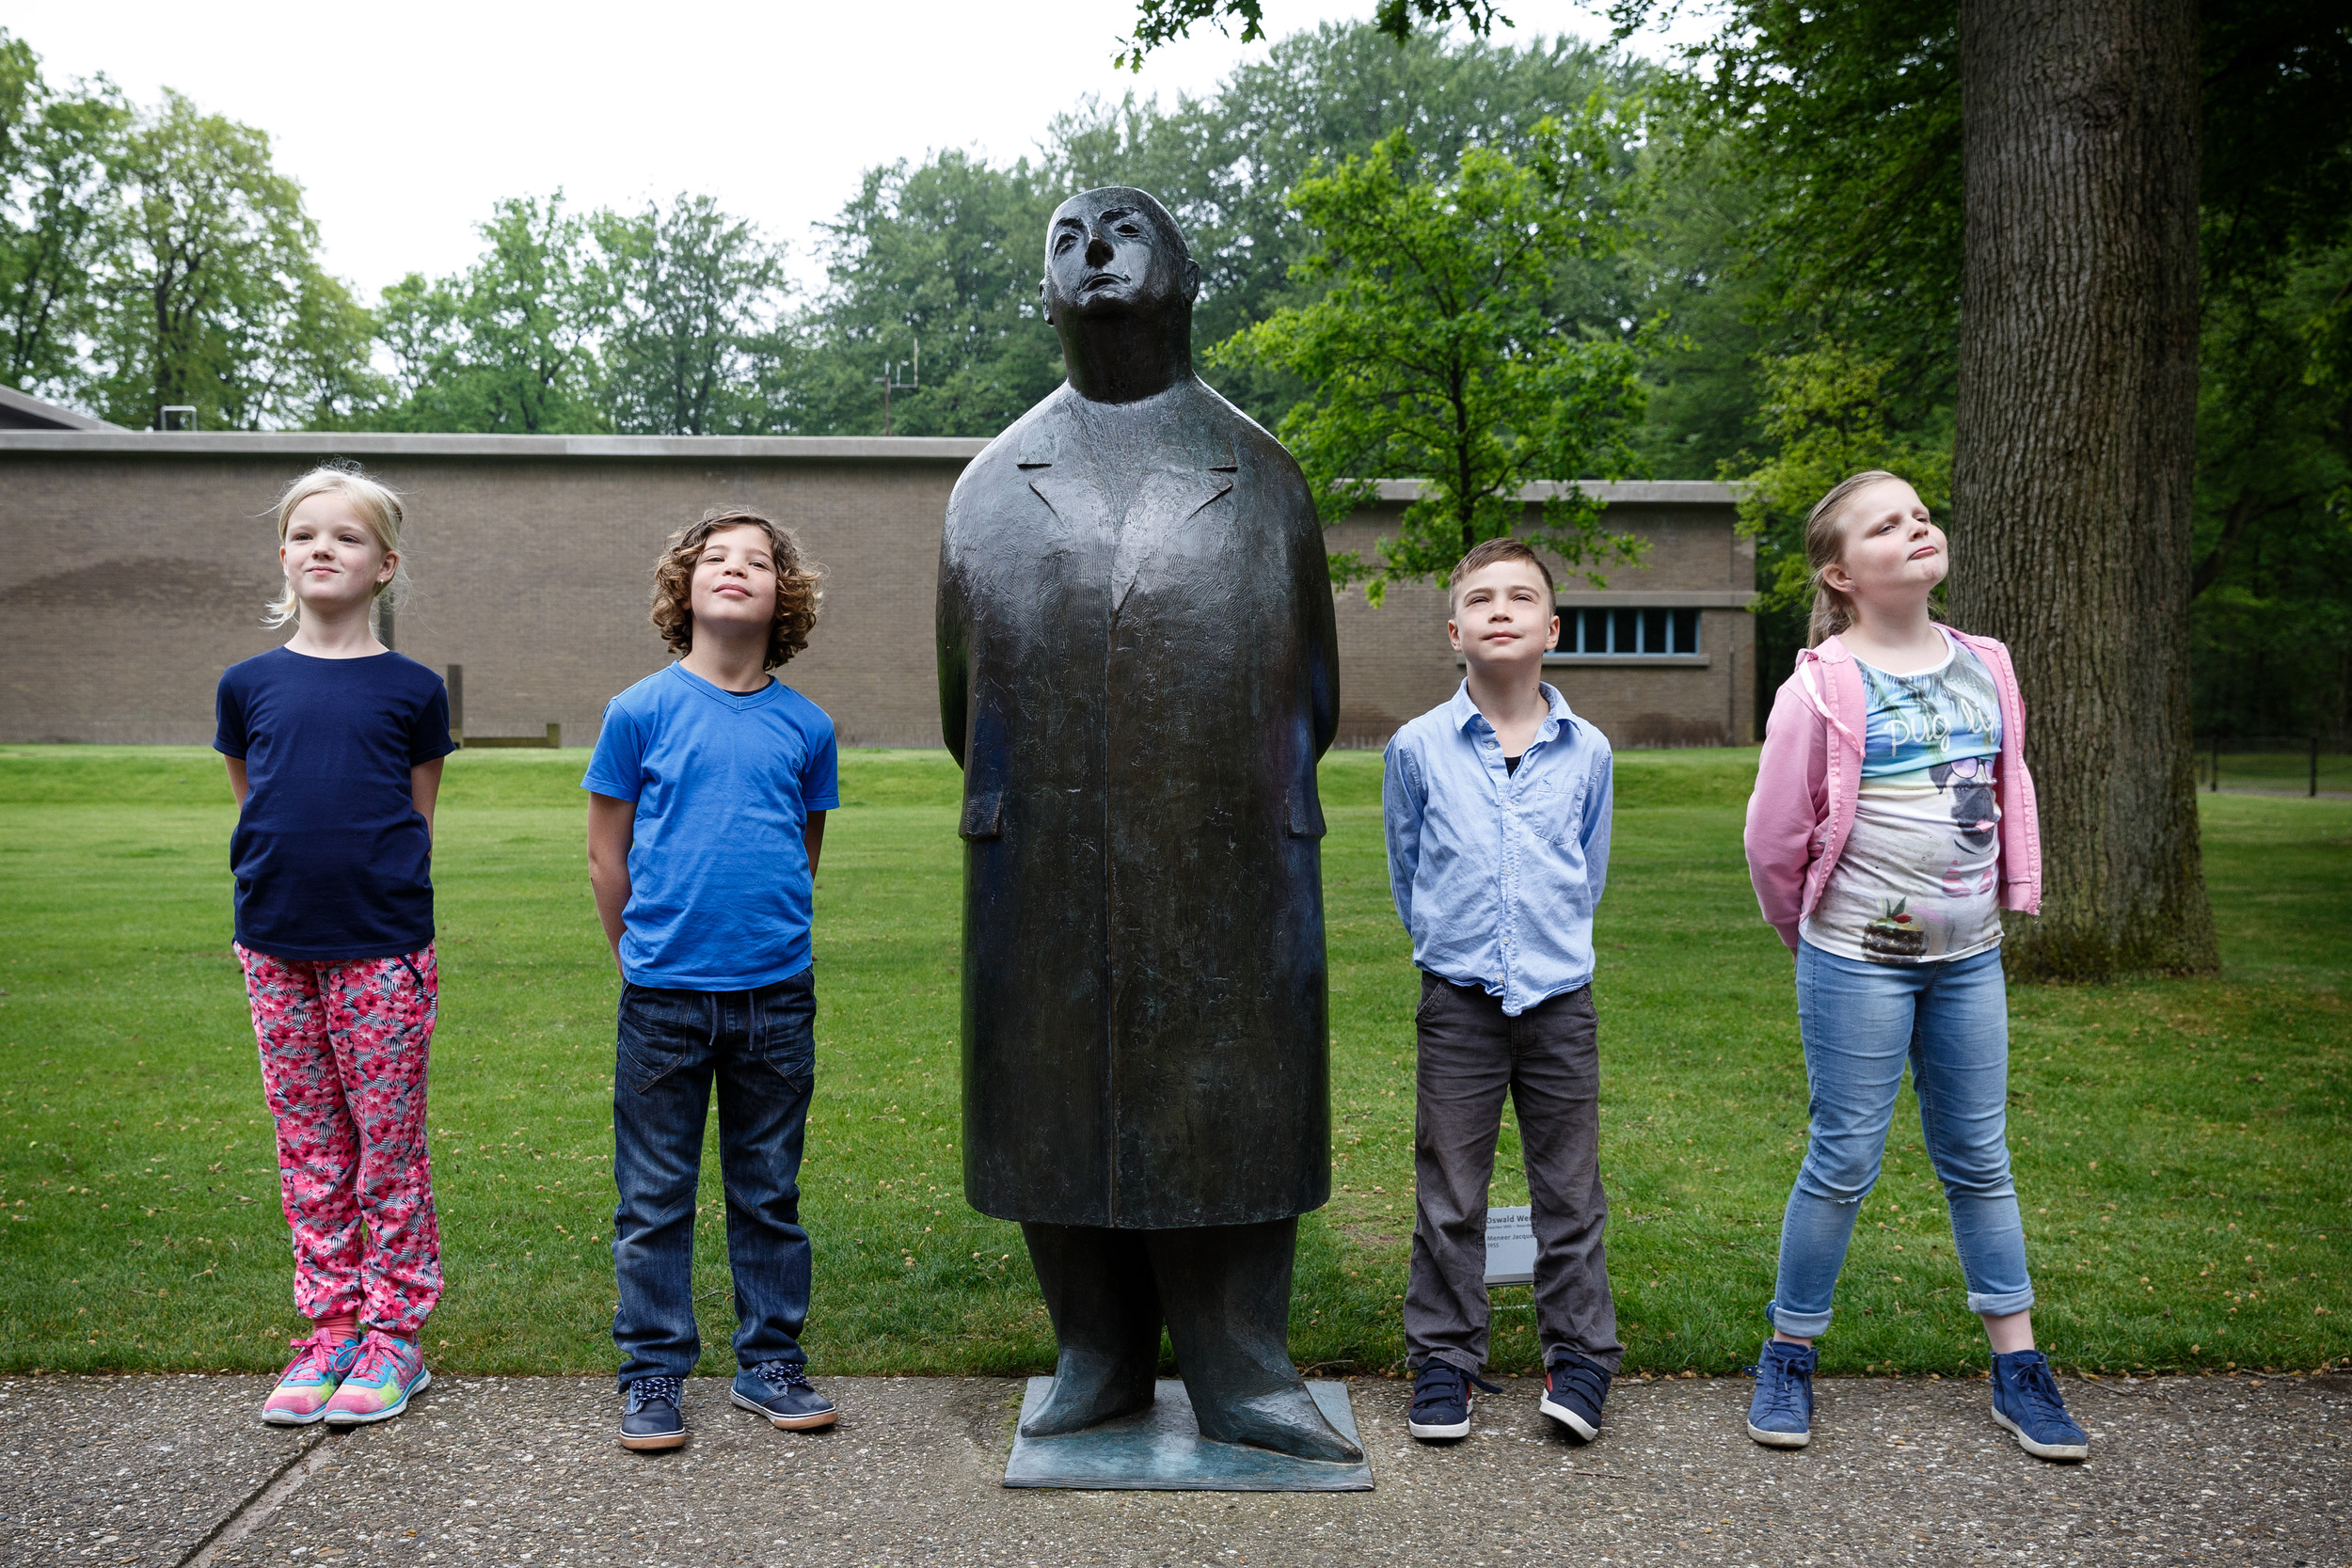 Children with Meneer Jacques (Mister Jacques), entrance museum, photo: Wieneke Hofland